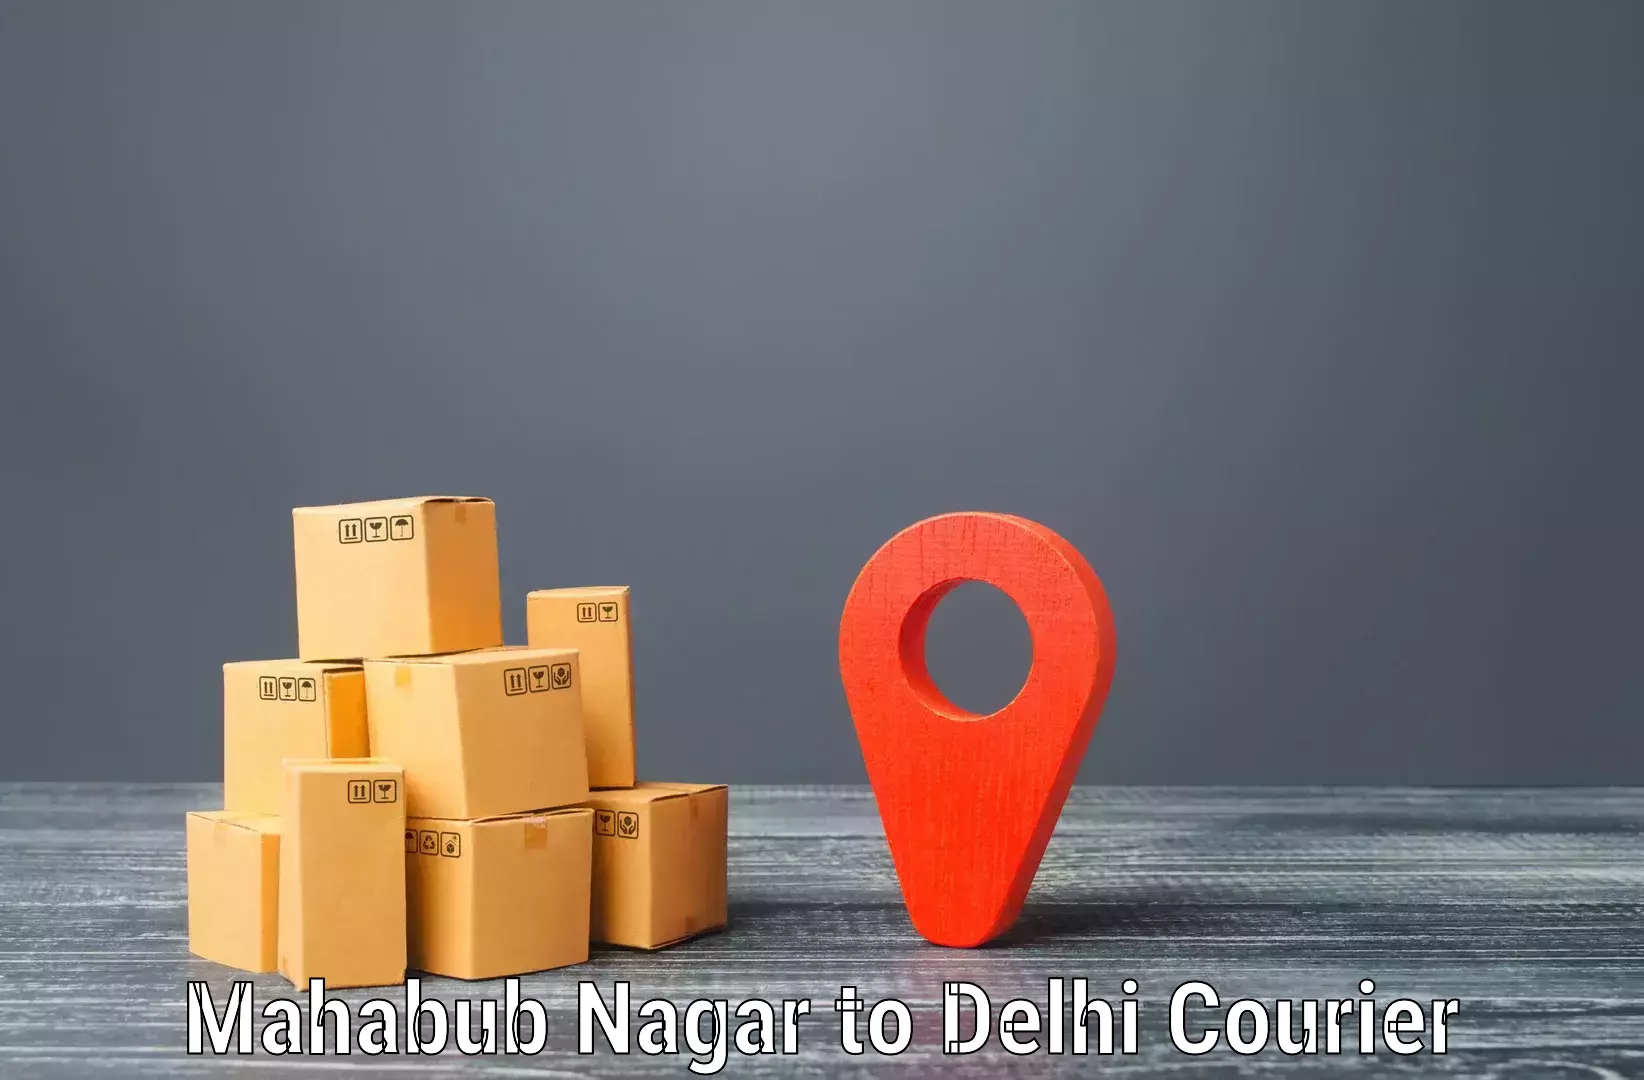 Express delivery network Mahabub Nagar to Delhi